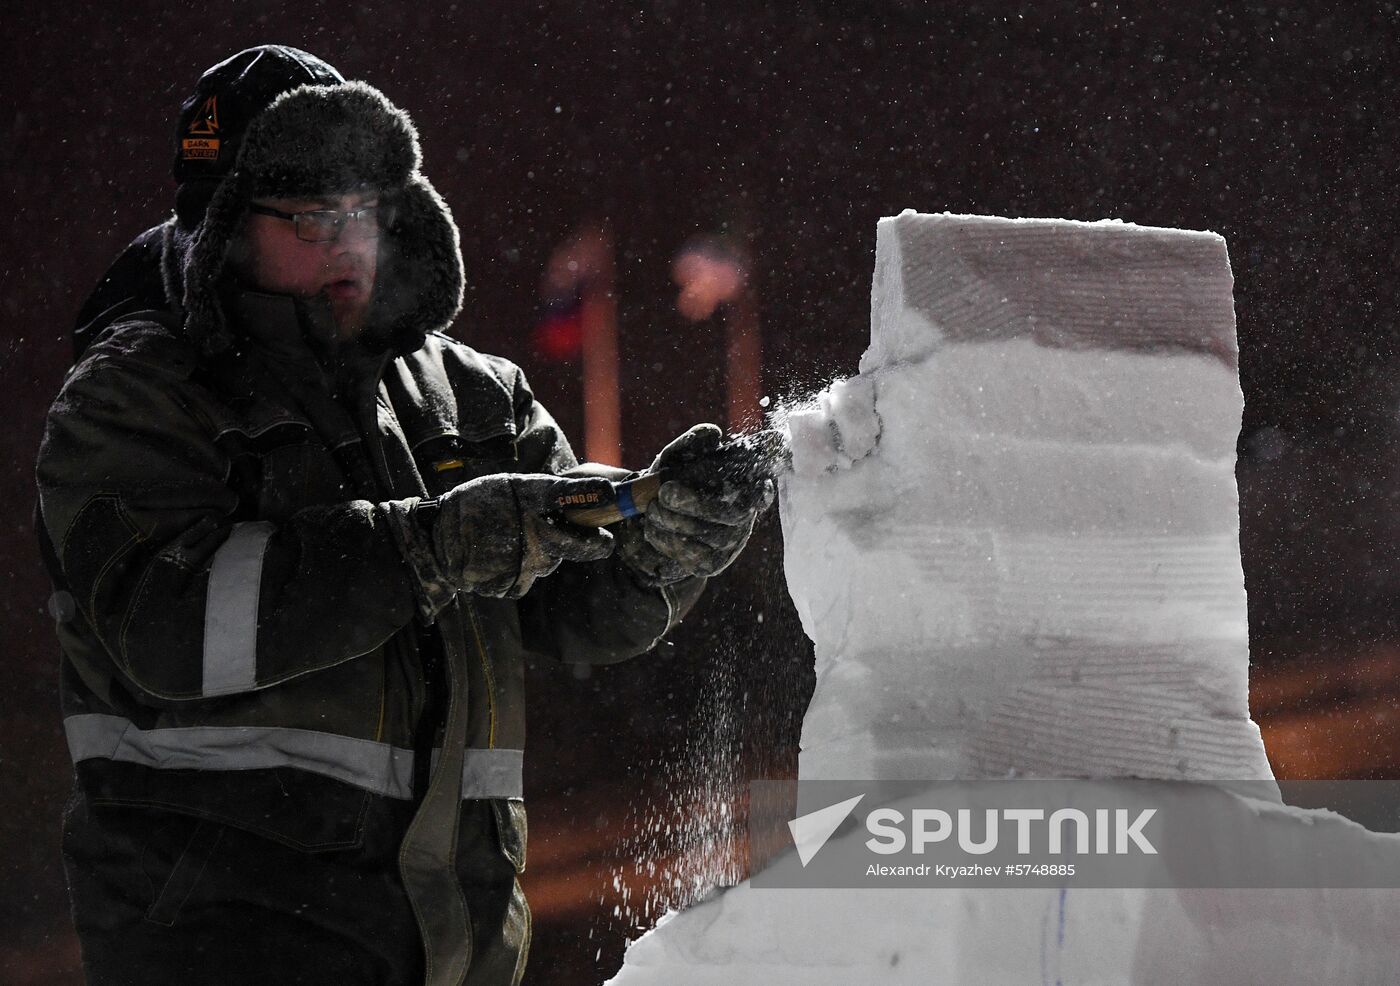 Russia Snow Sculptures